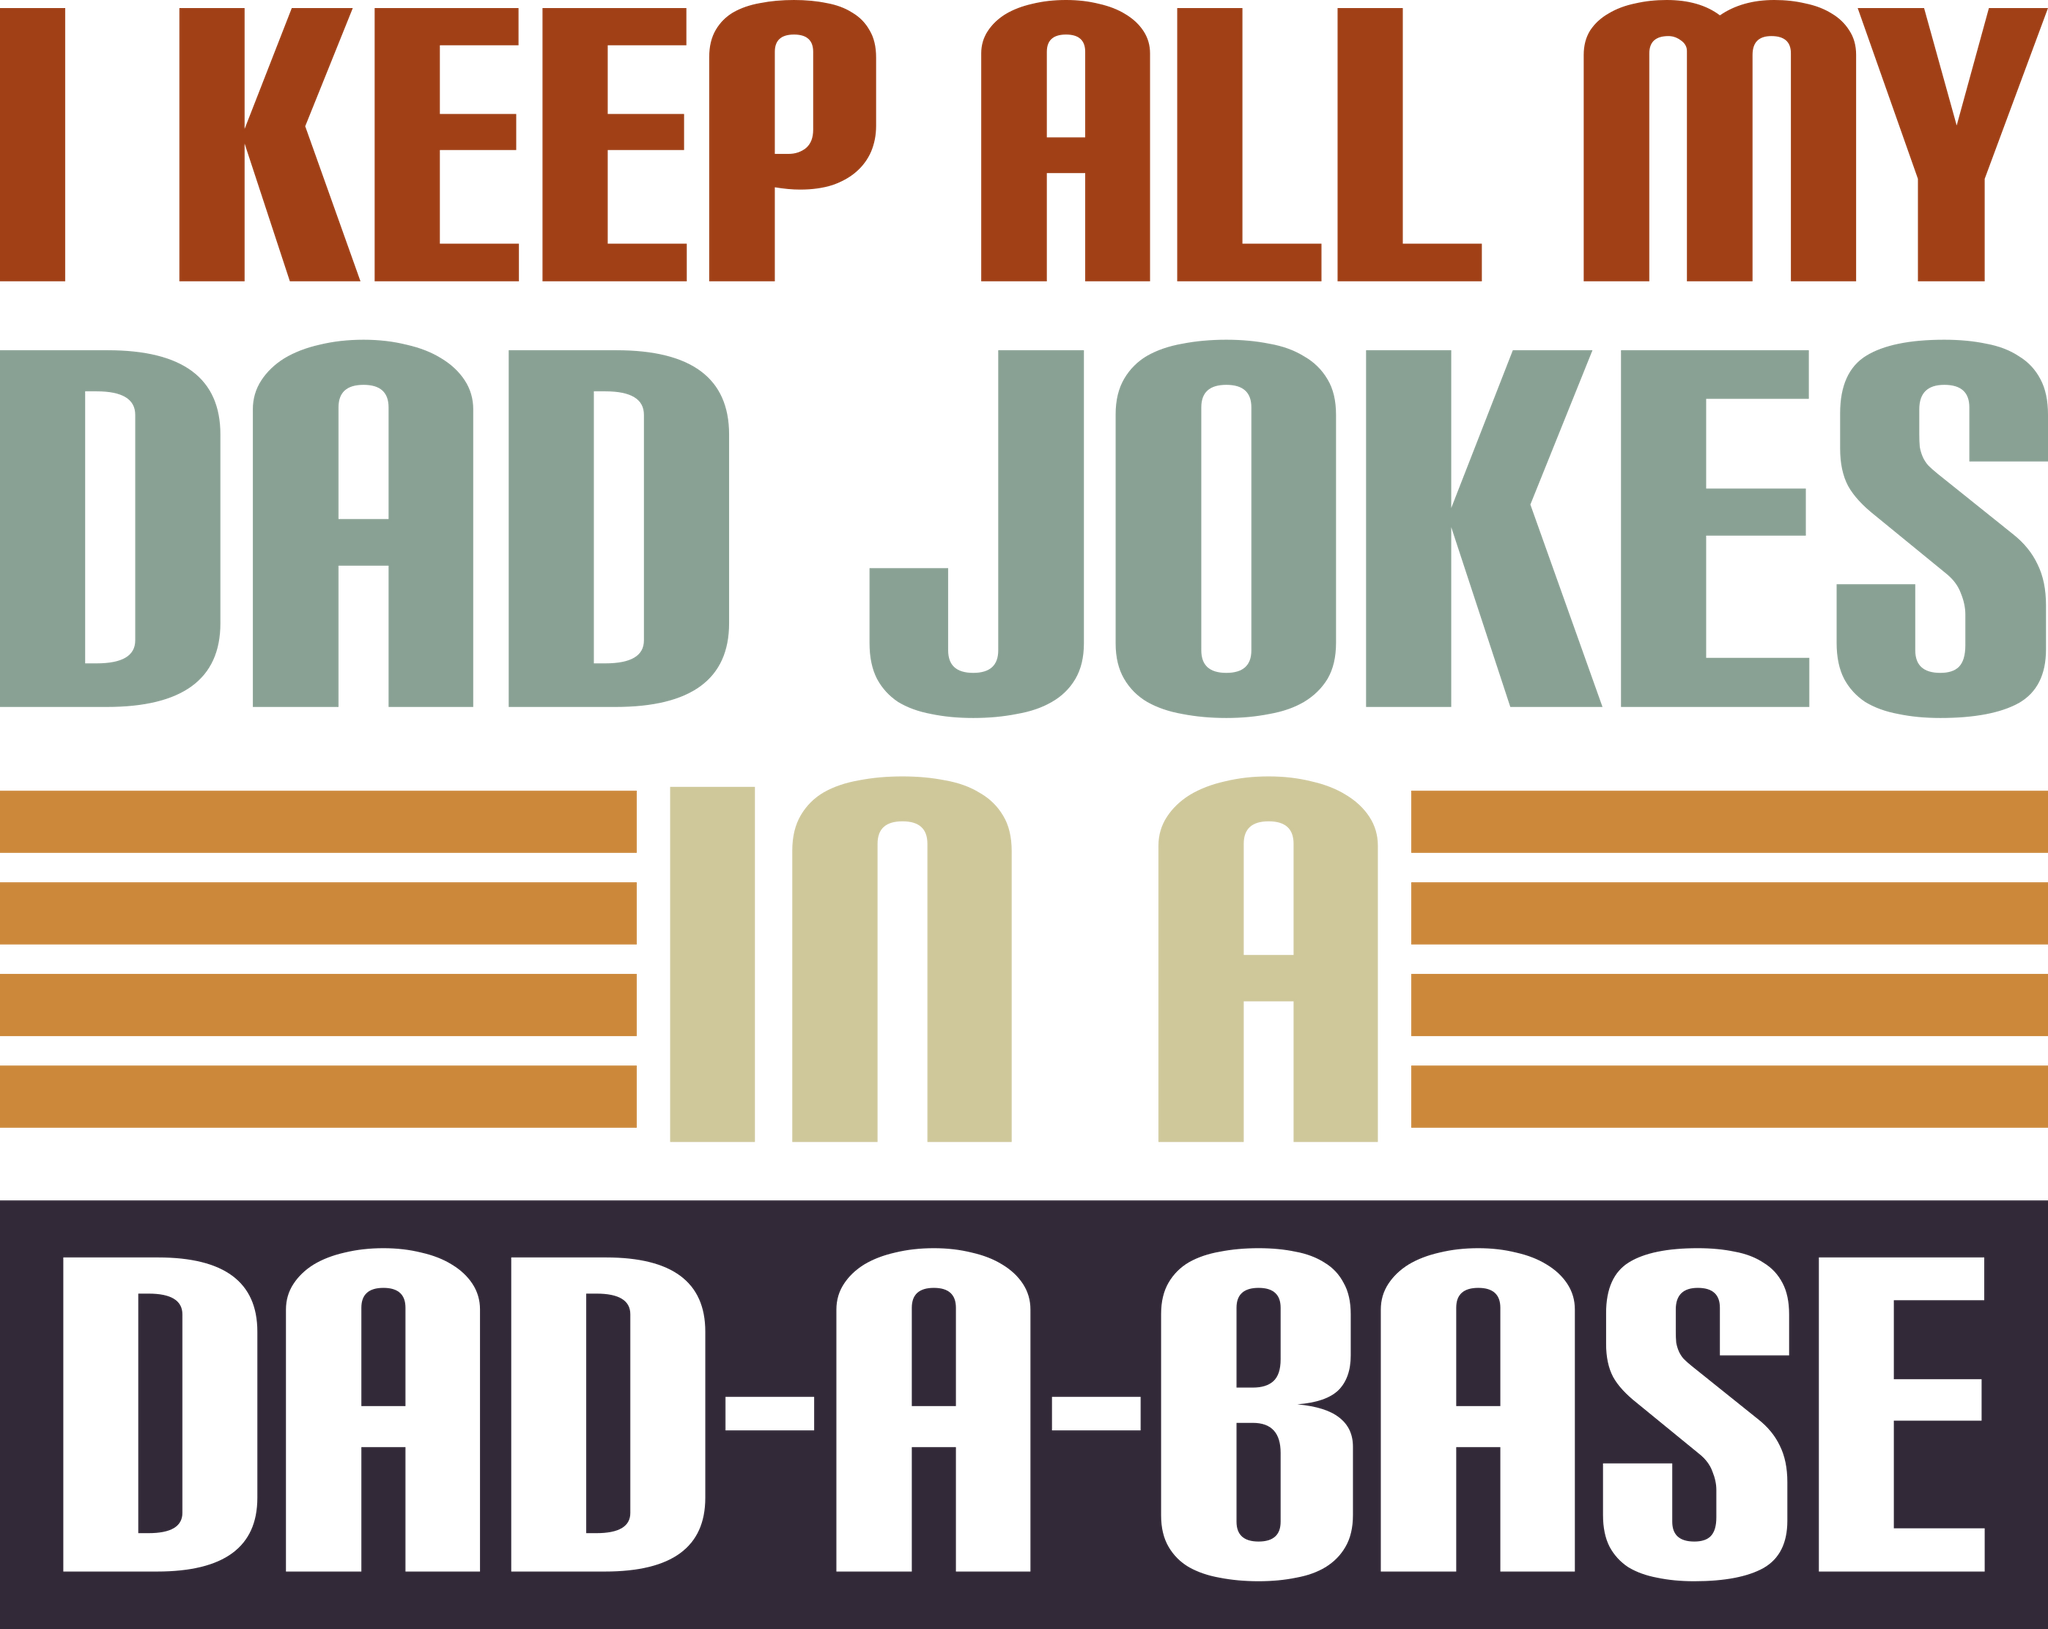 I Keep All My Dad Jokes Dadabase